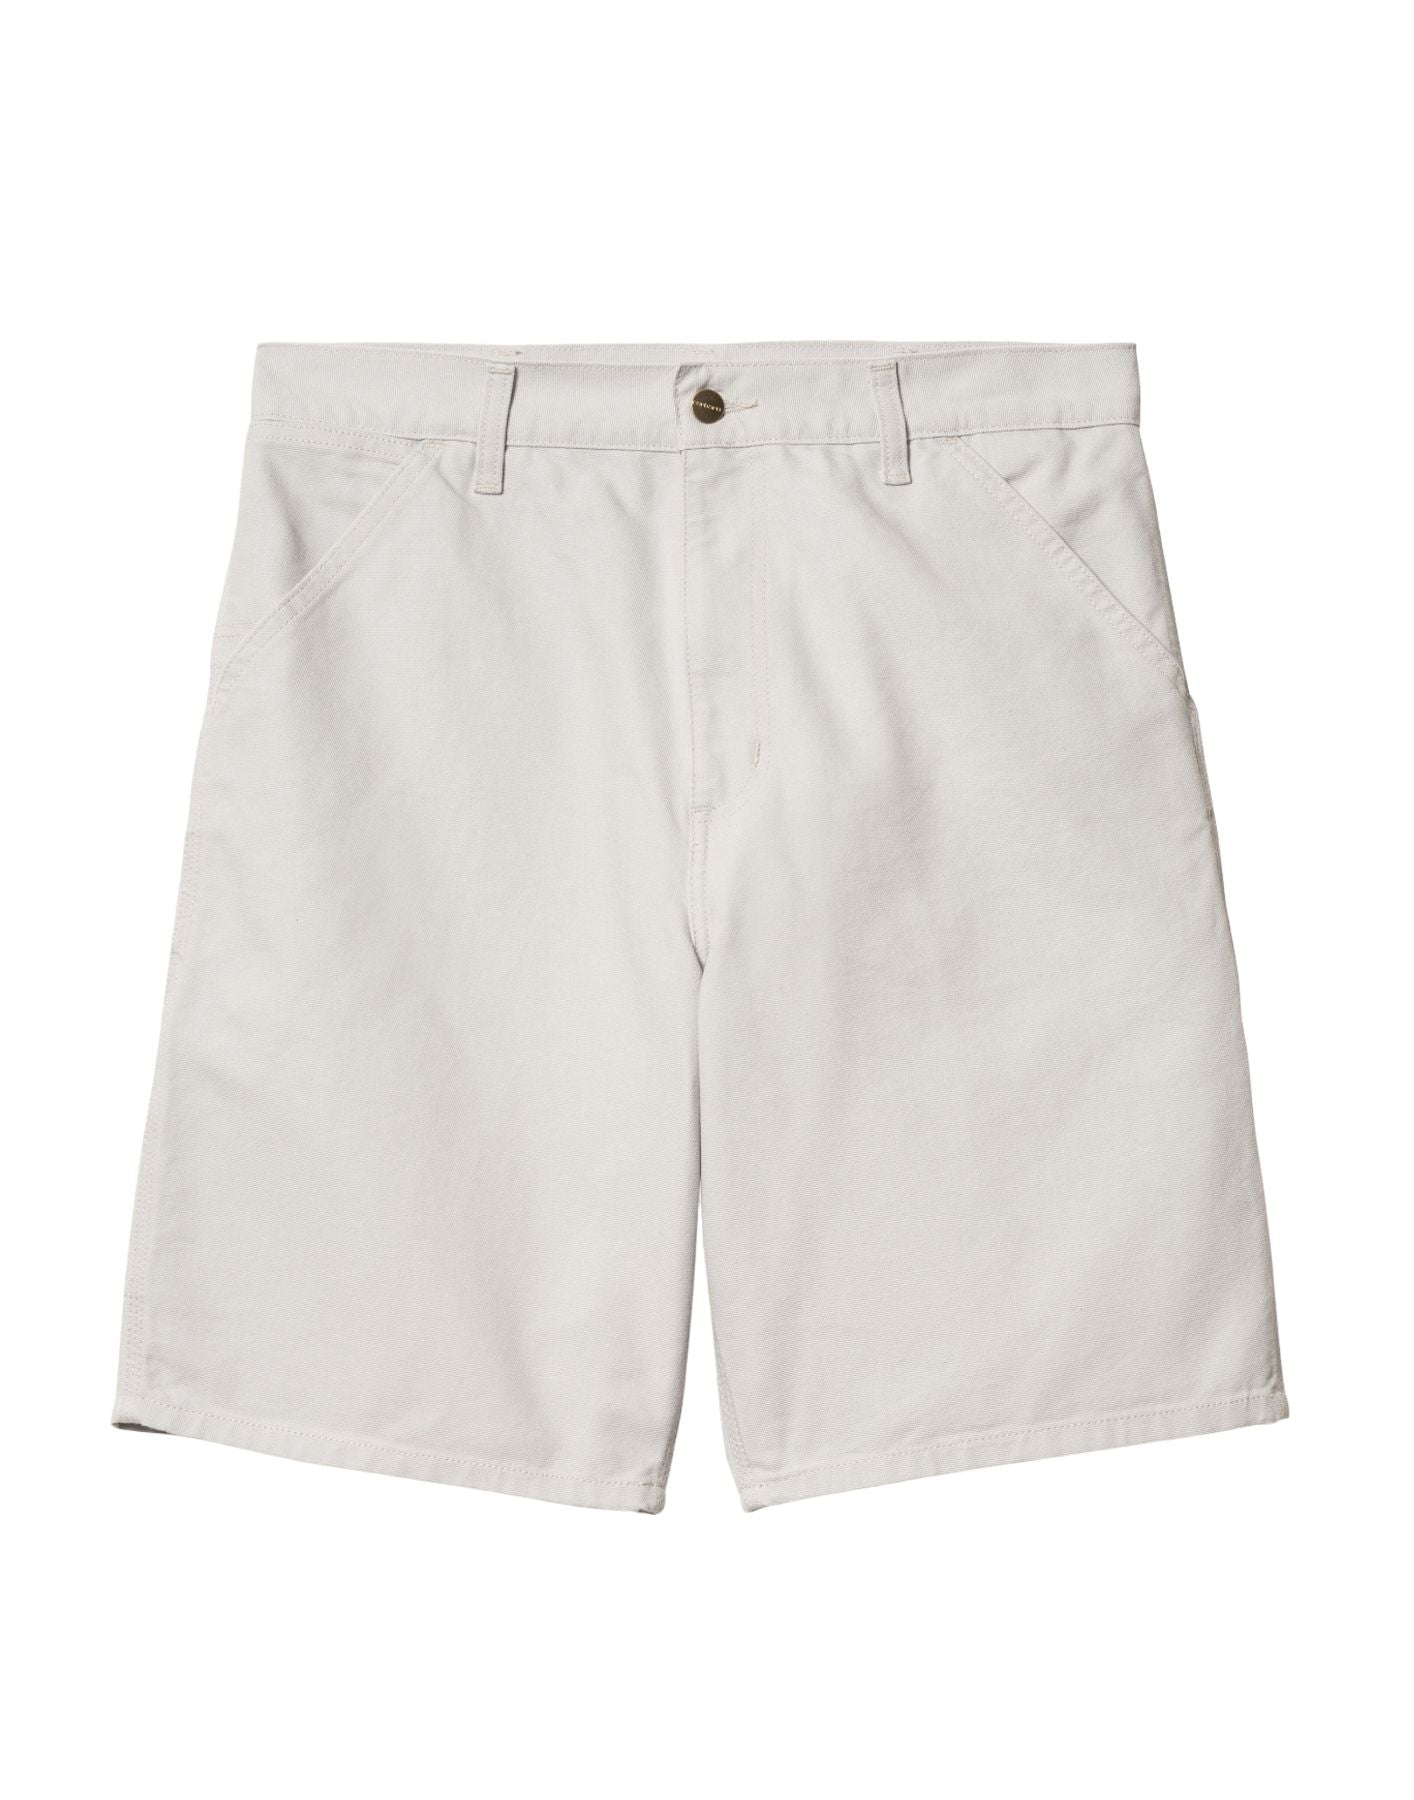 Pantalones cortos para hombre I027942 29J02 GREY CARHARTT WIP 